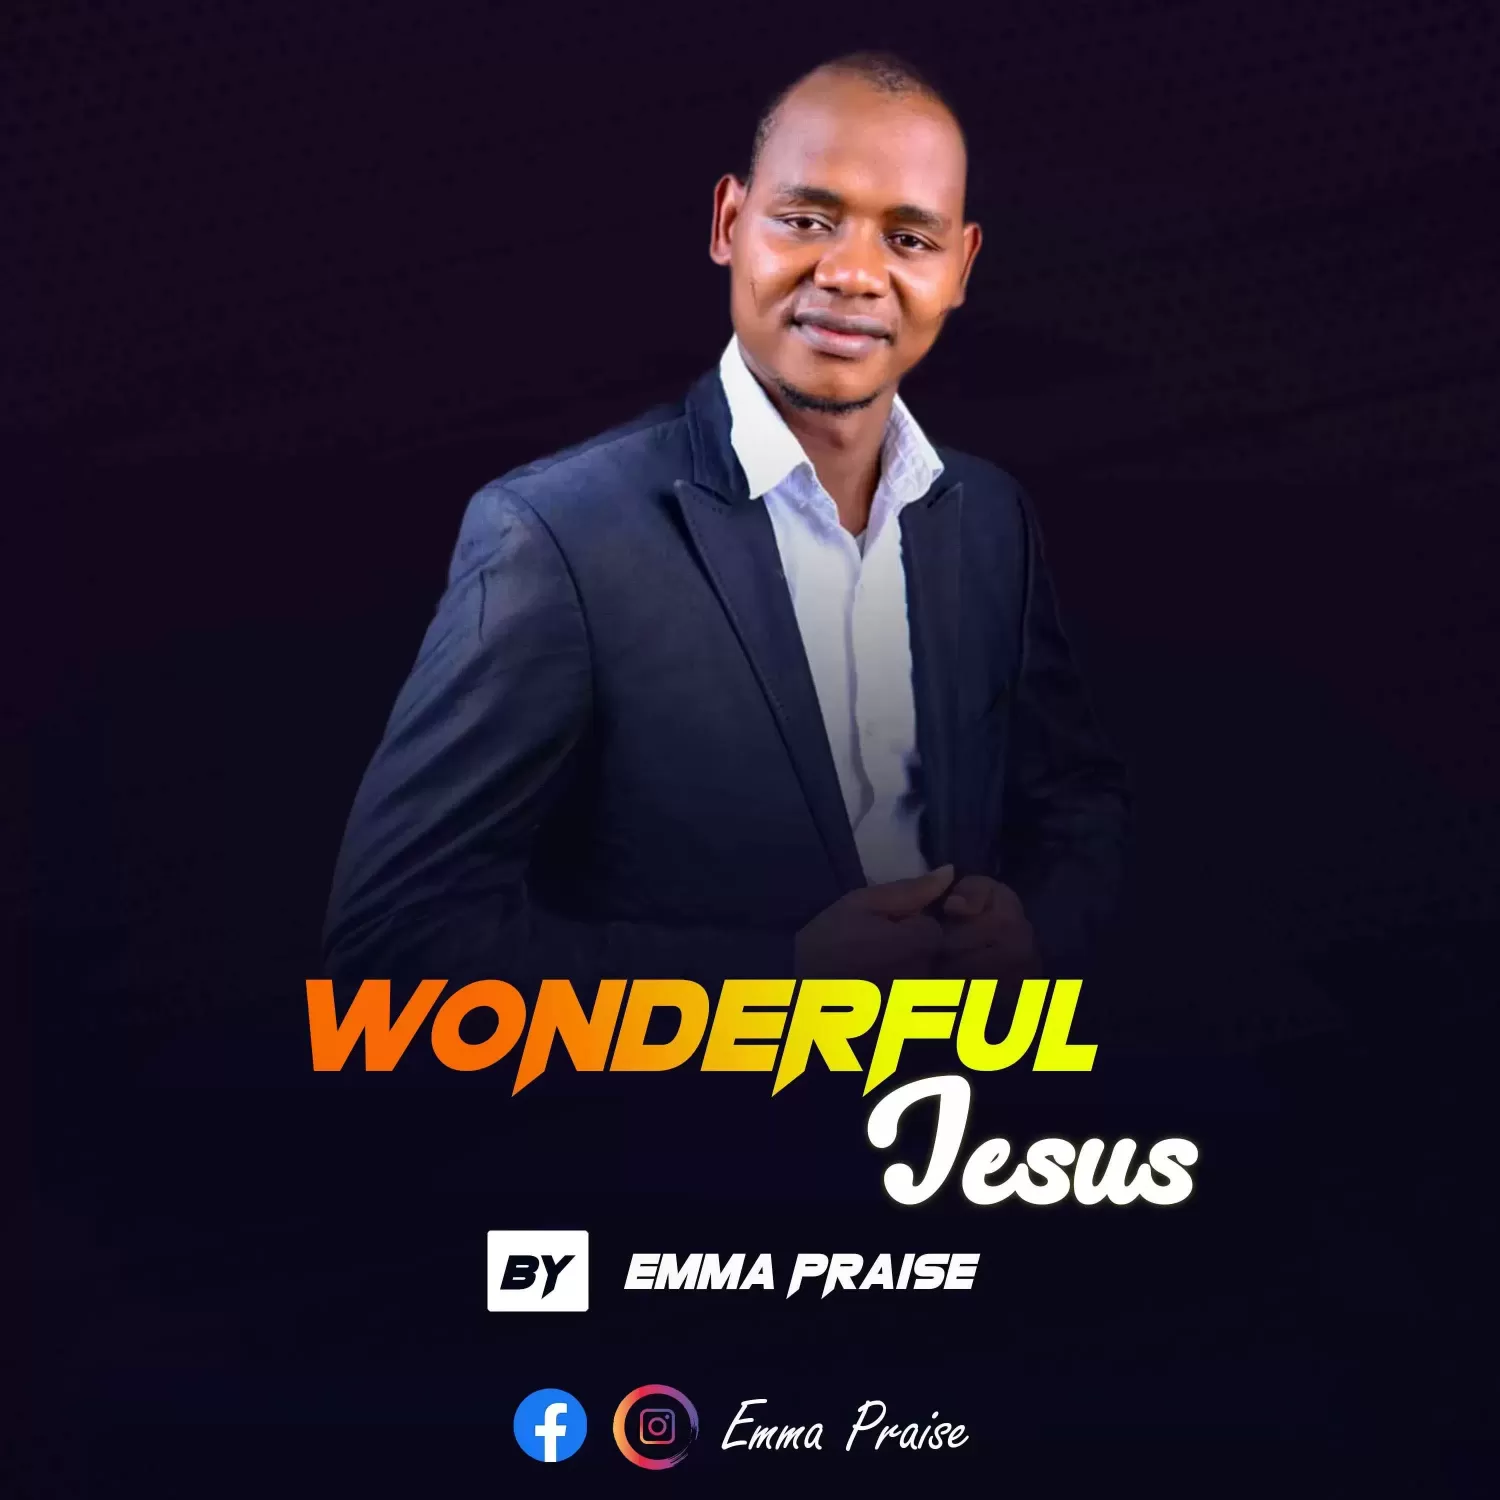 Wonderful Jesus by Emma Praise